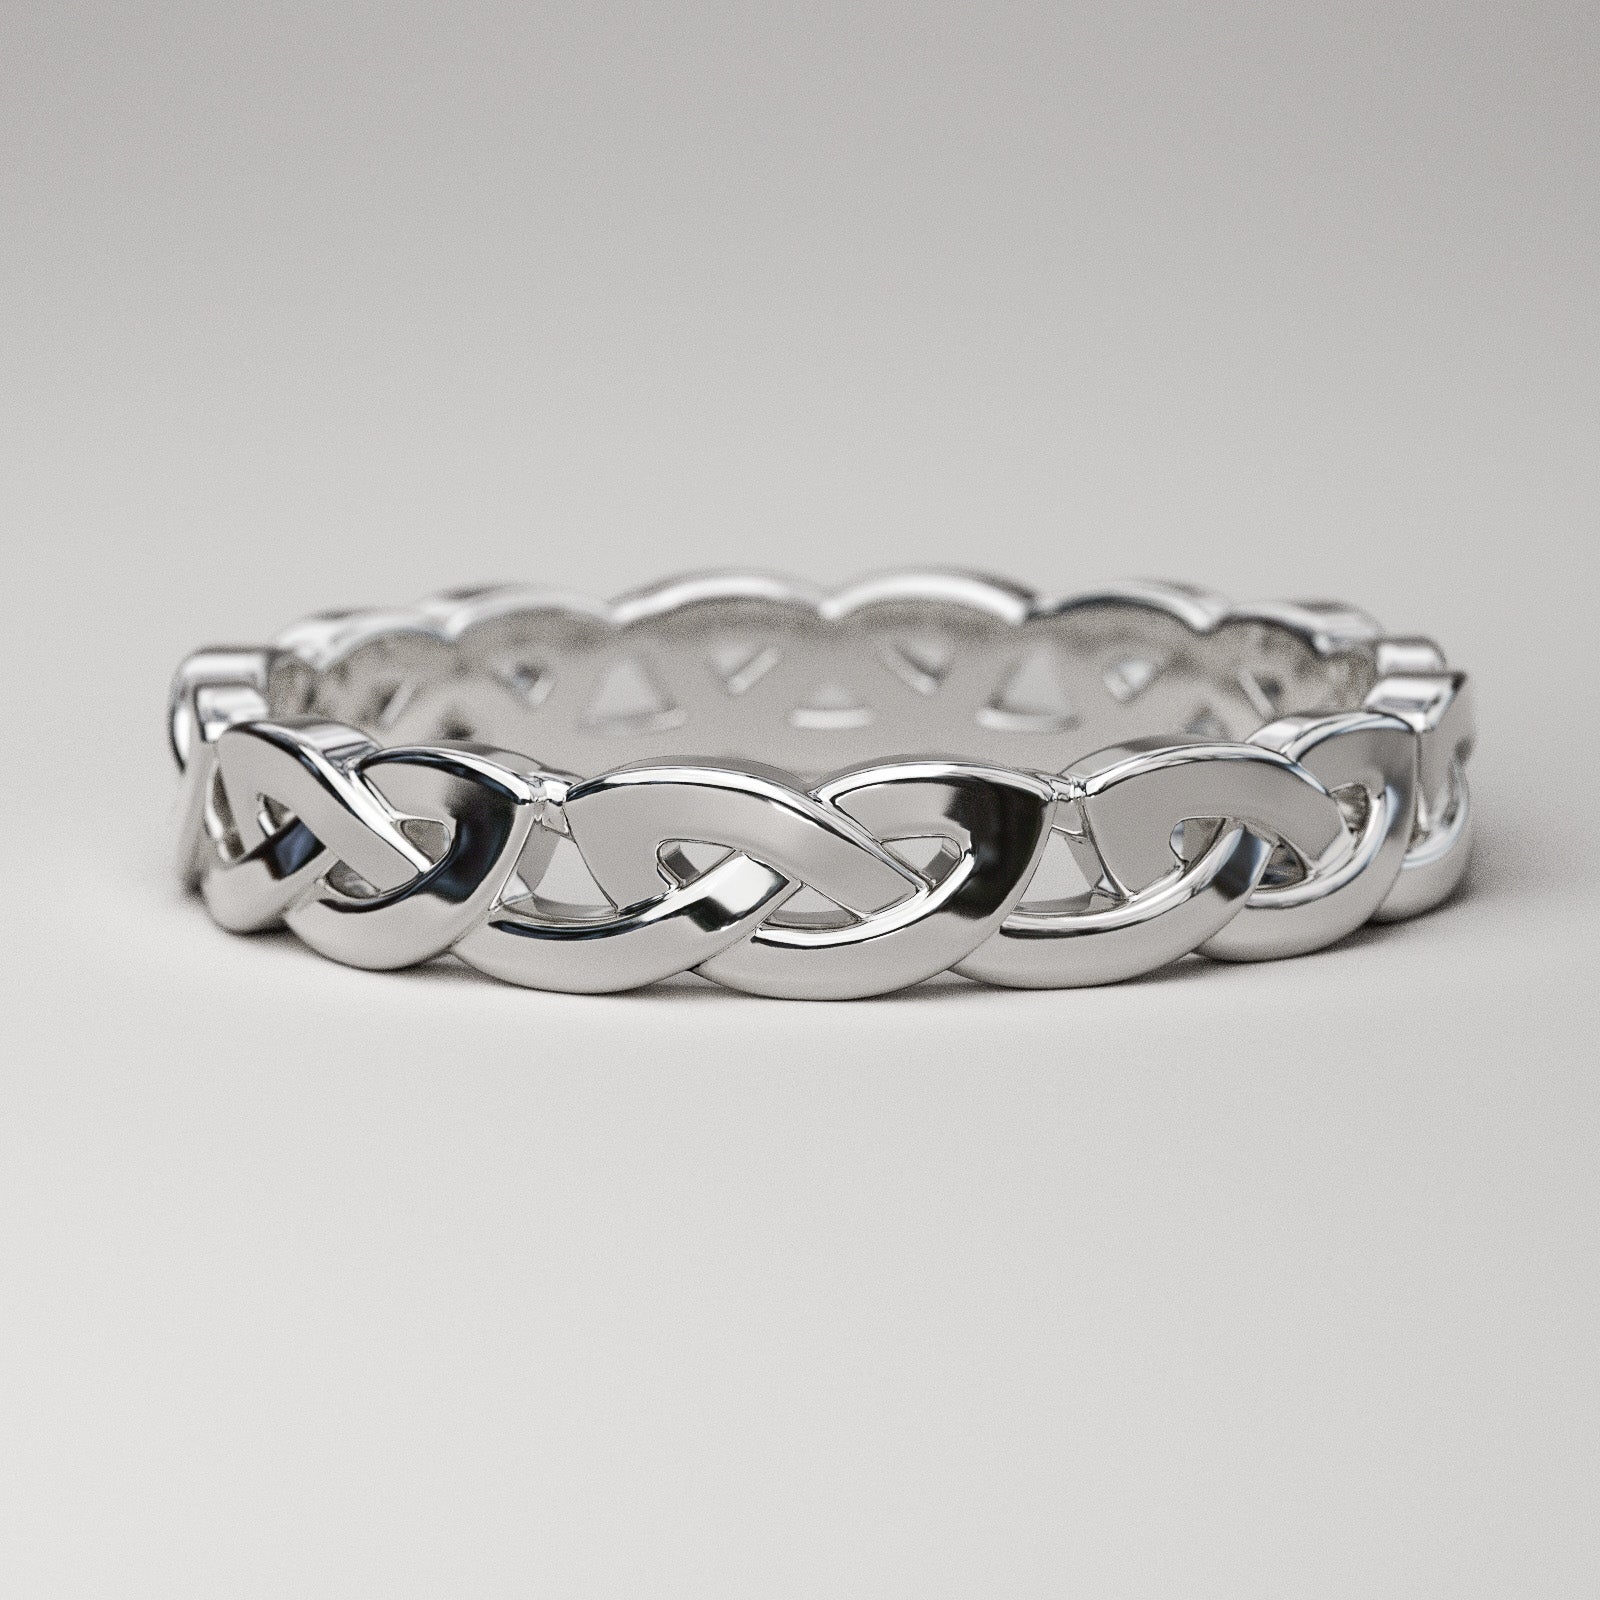 Overhand knot eternity ring, wedding band for women in 14k or 18k white gold